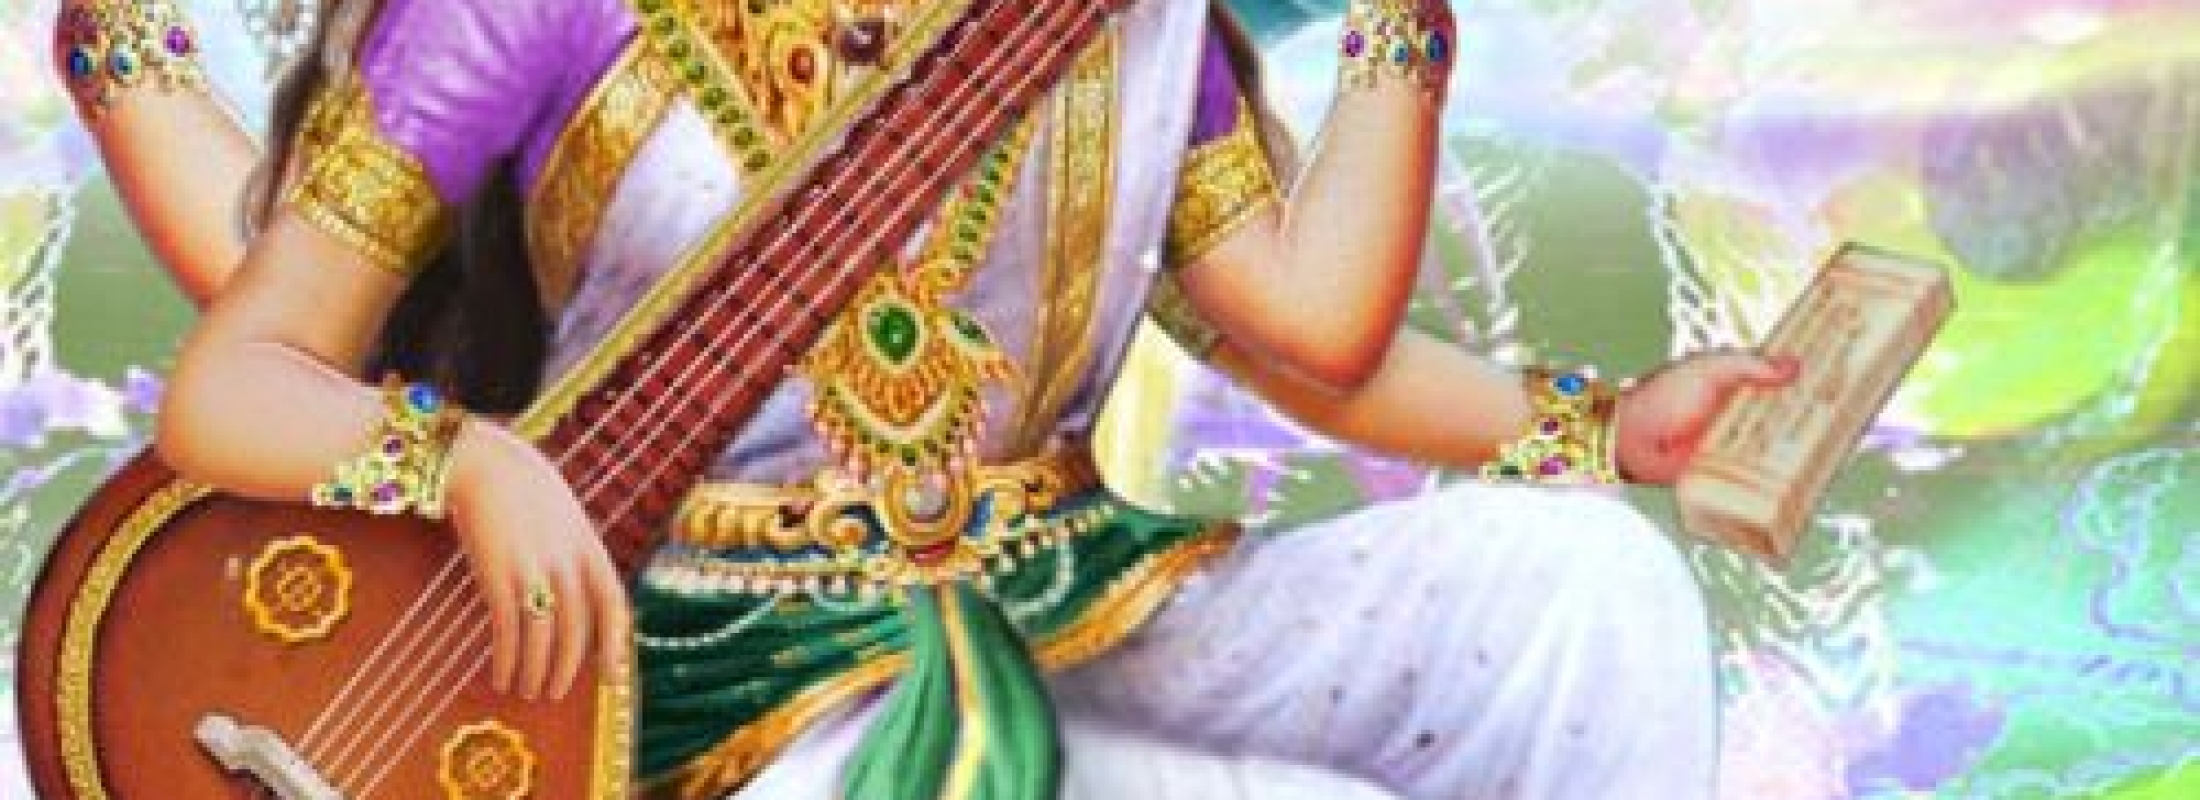 64 искусства богини Сарасвати для мужчин и женщин